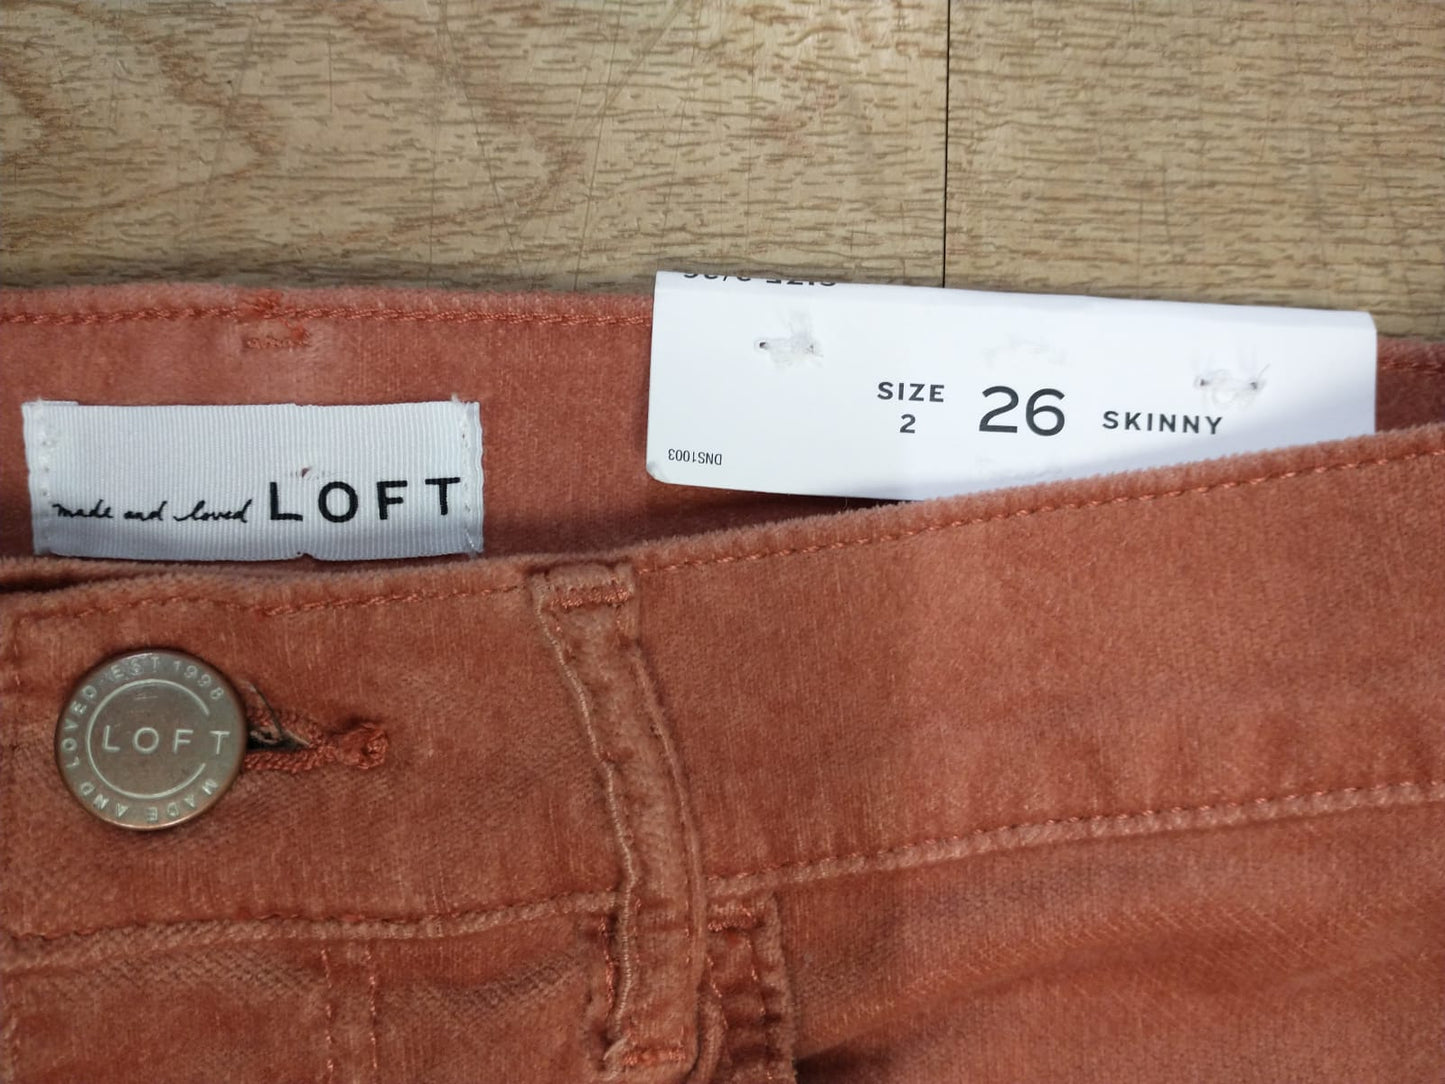 BNWT LOFT Salmon Pink Trousers Cotton Blend Size UK 10